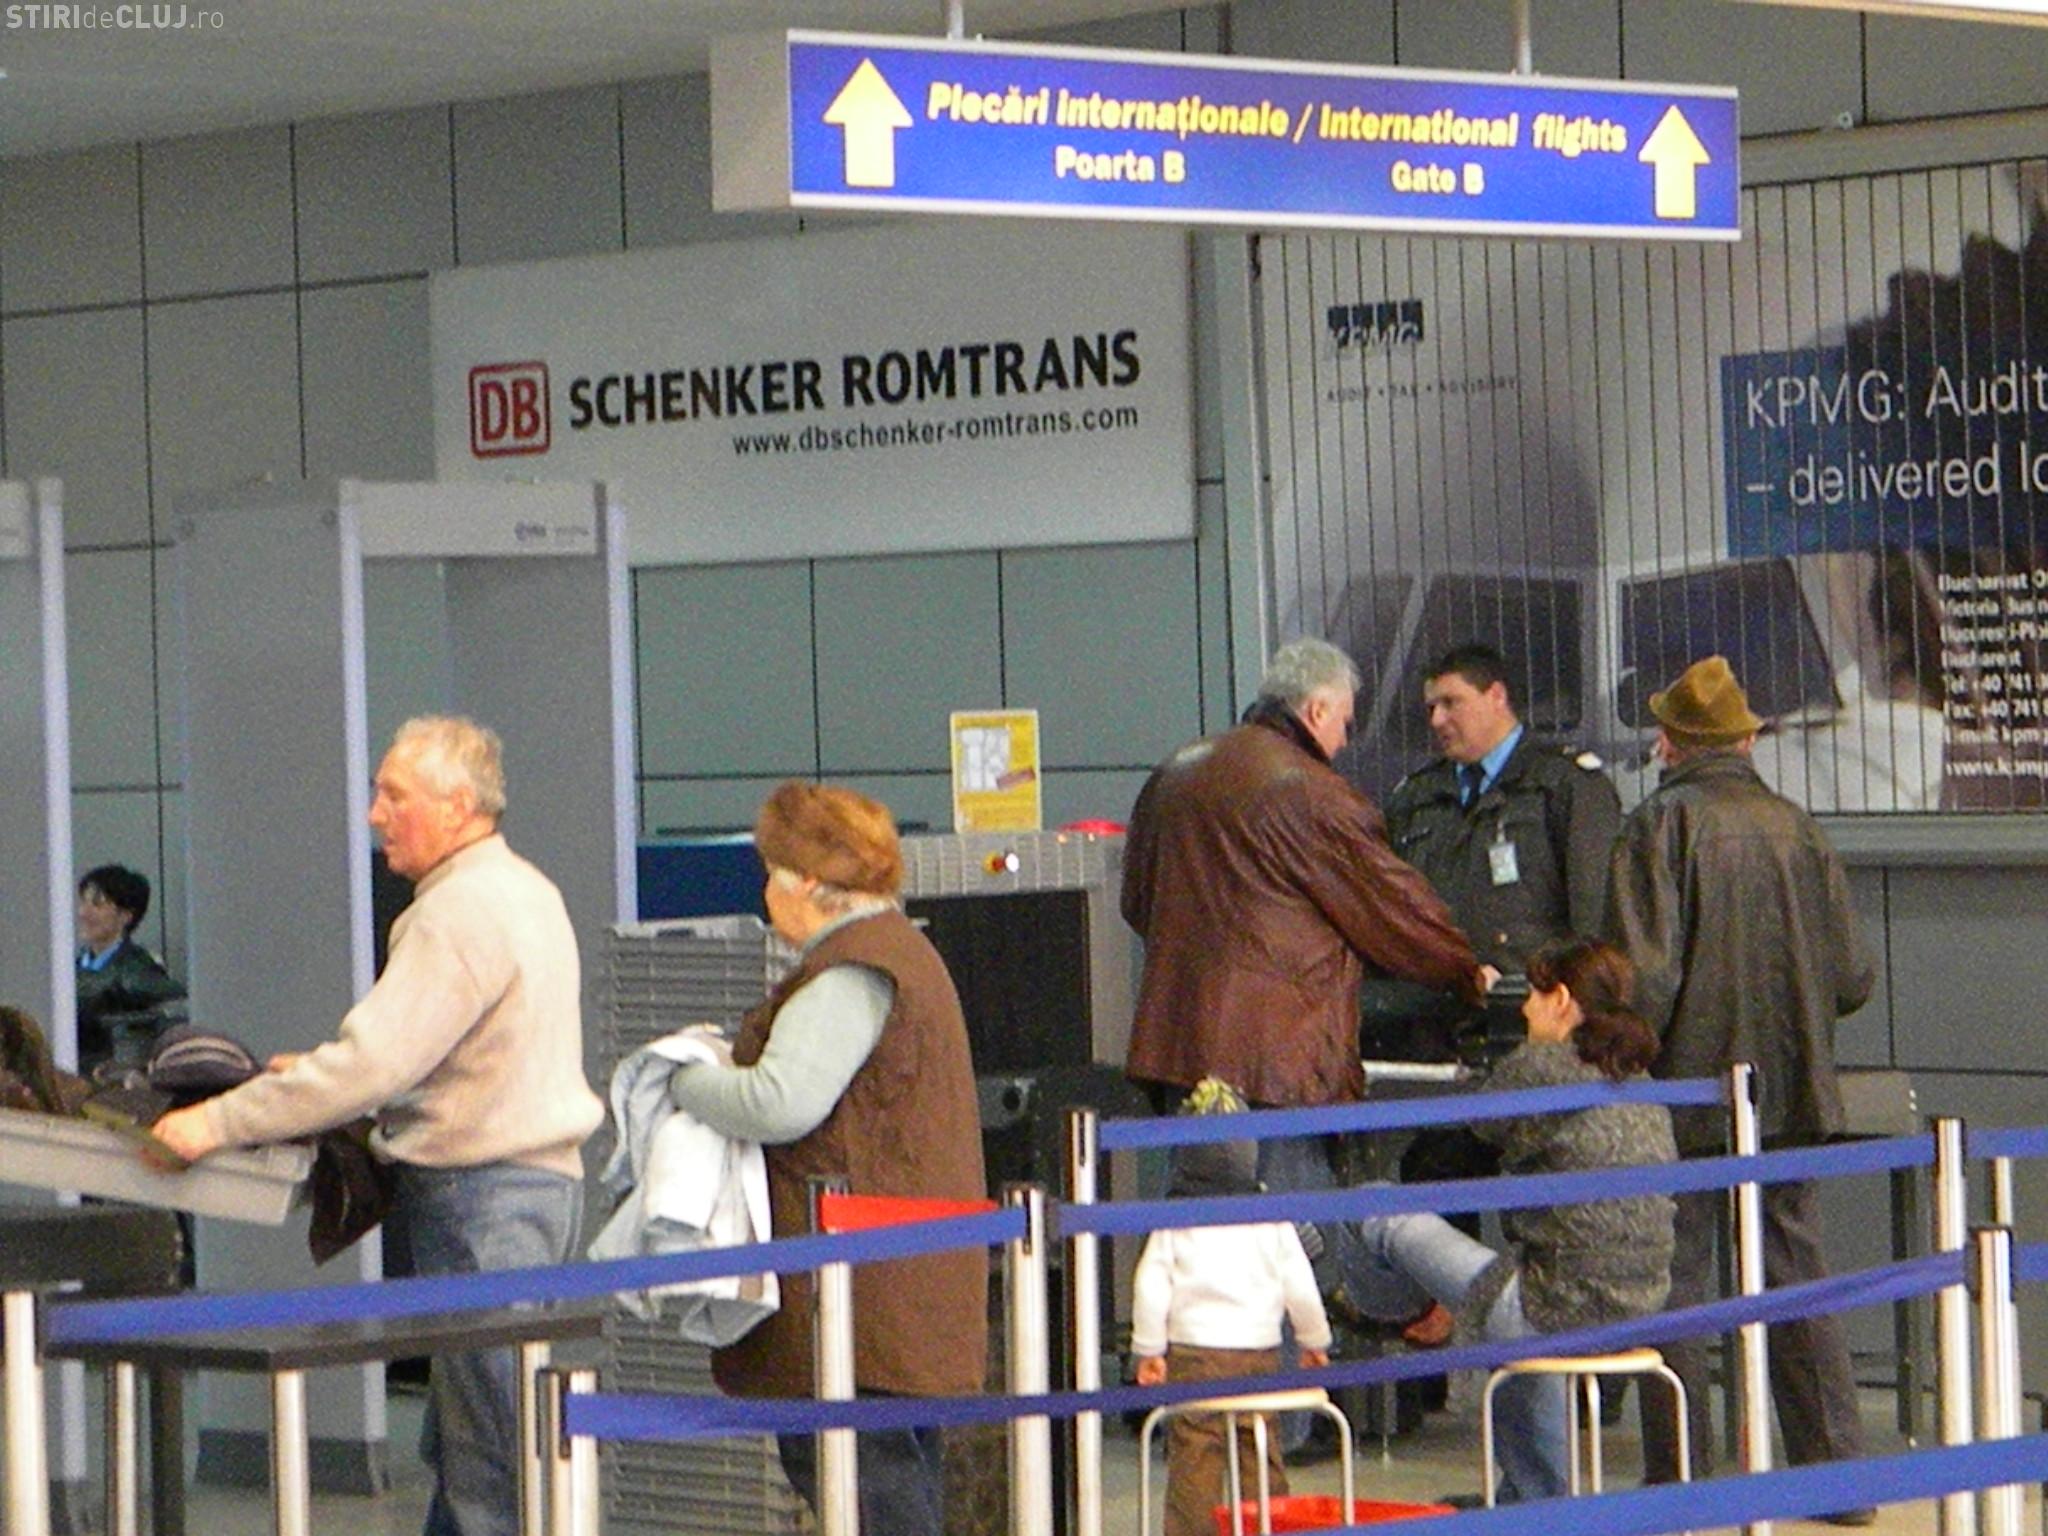 Aeroportul International Cluj A Pierdut Cursele Wizz Air Dar